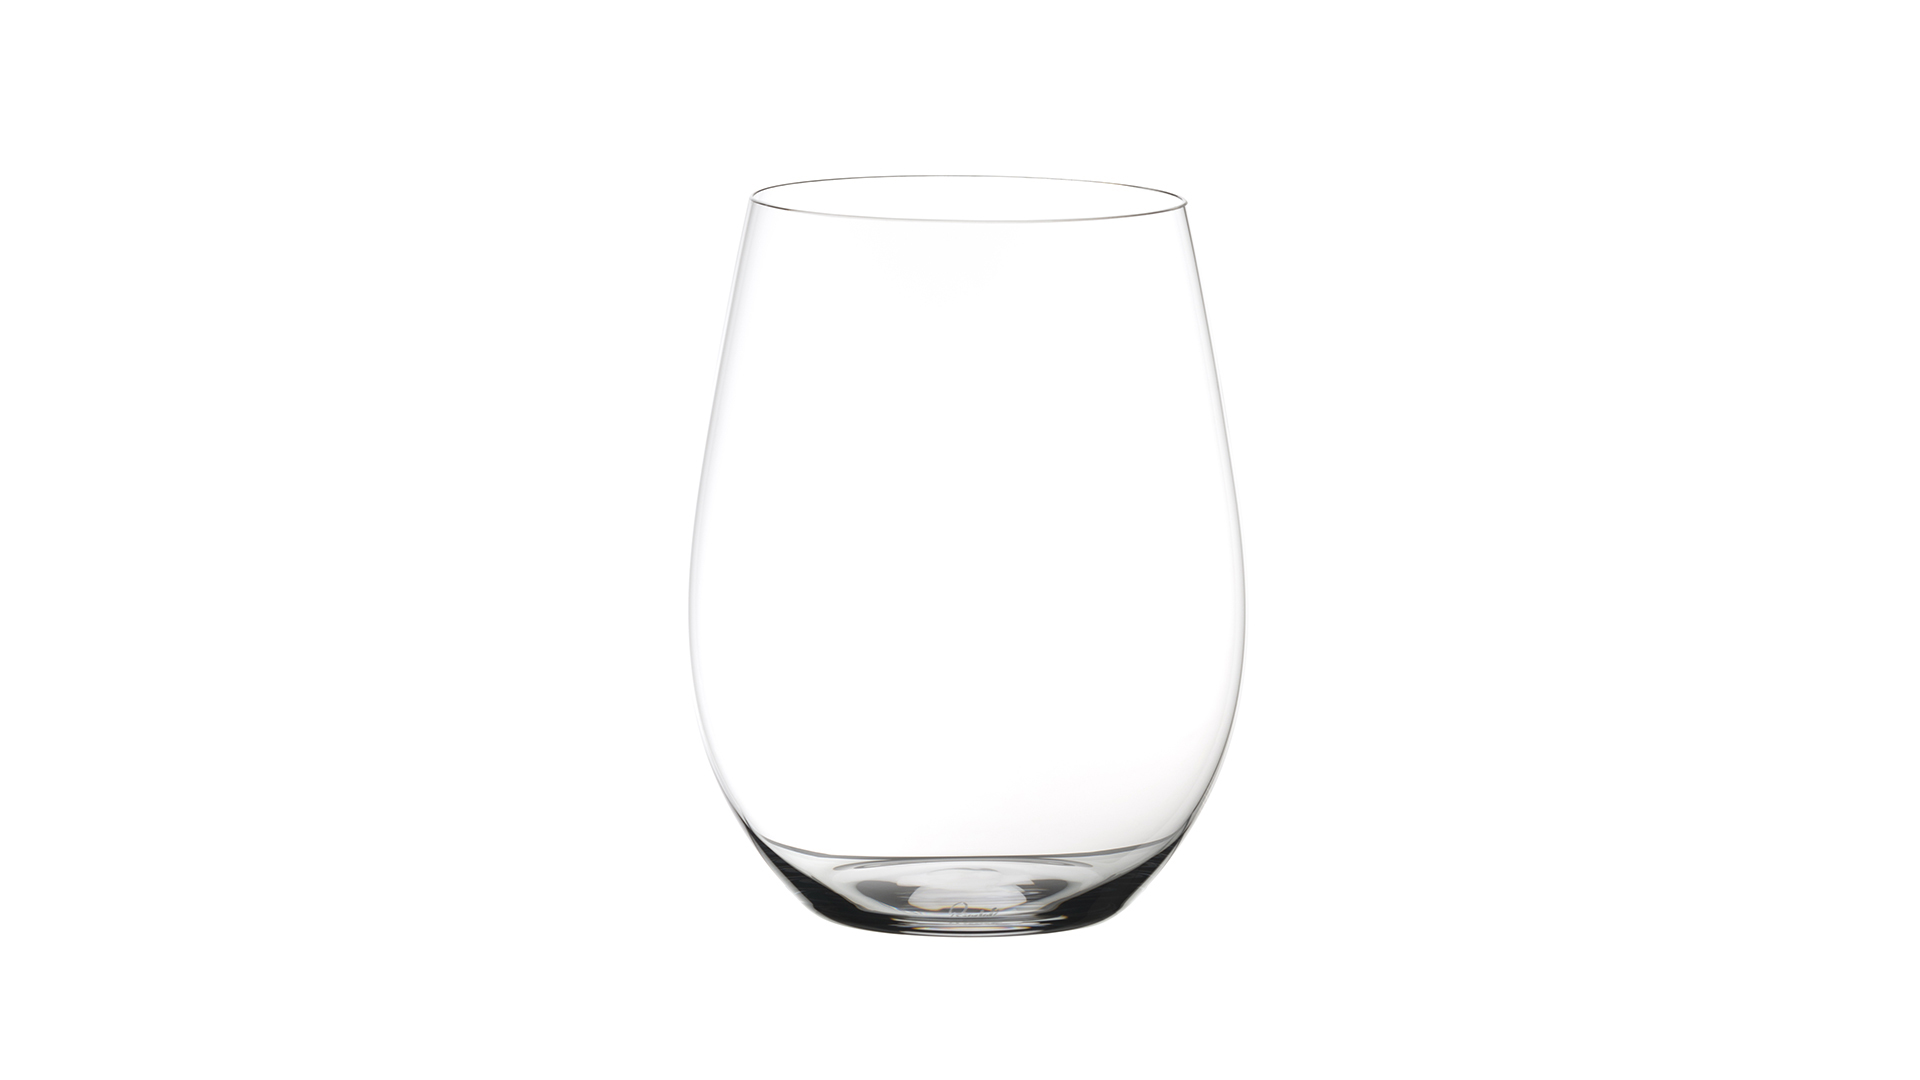 Набор стаканов для красного вина O Wine Tumbler Cabernet/Merlot Riedel, 620мл, 2шт, стекло хрустальн